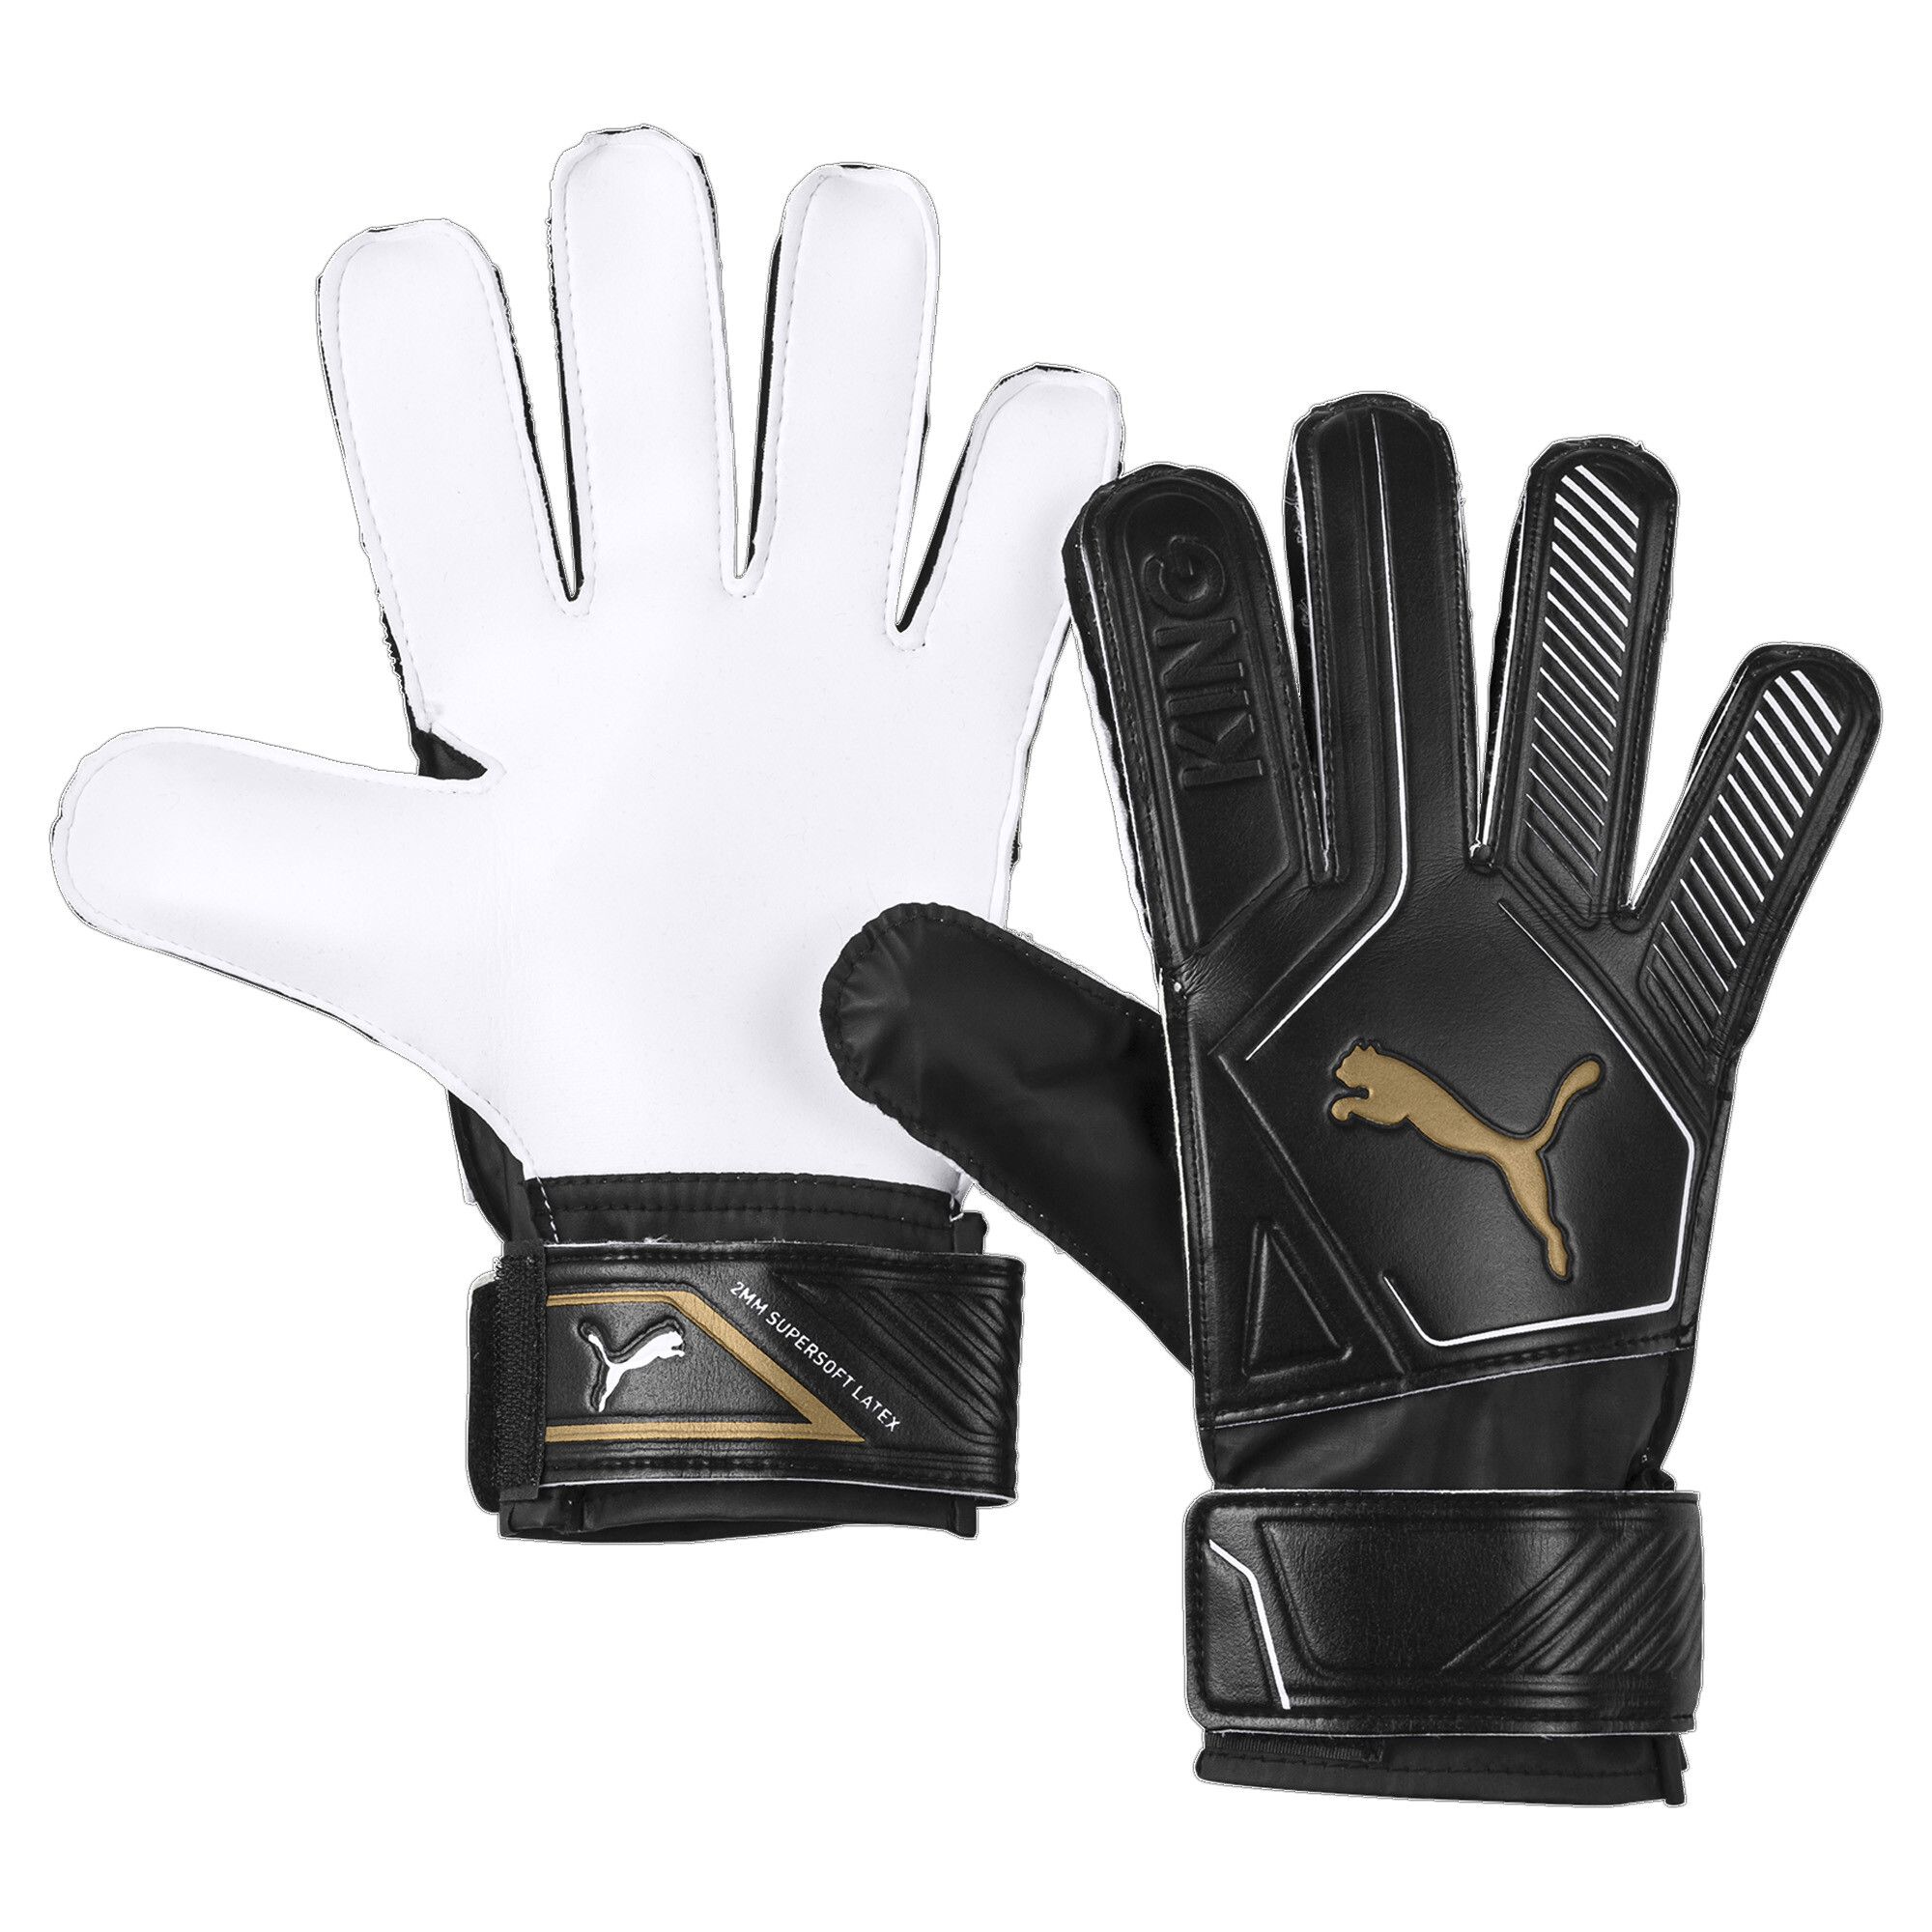 Puma King 4 Goalkeeper Gloves, Black, Size 10, Accessories